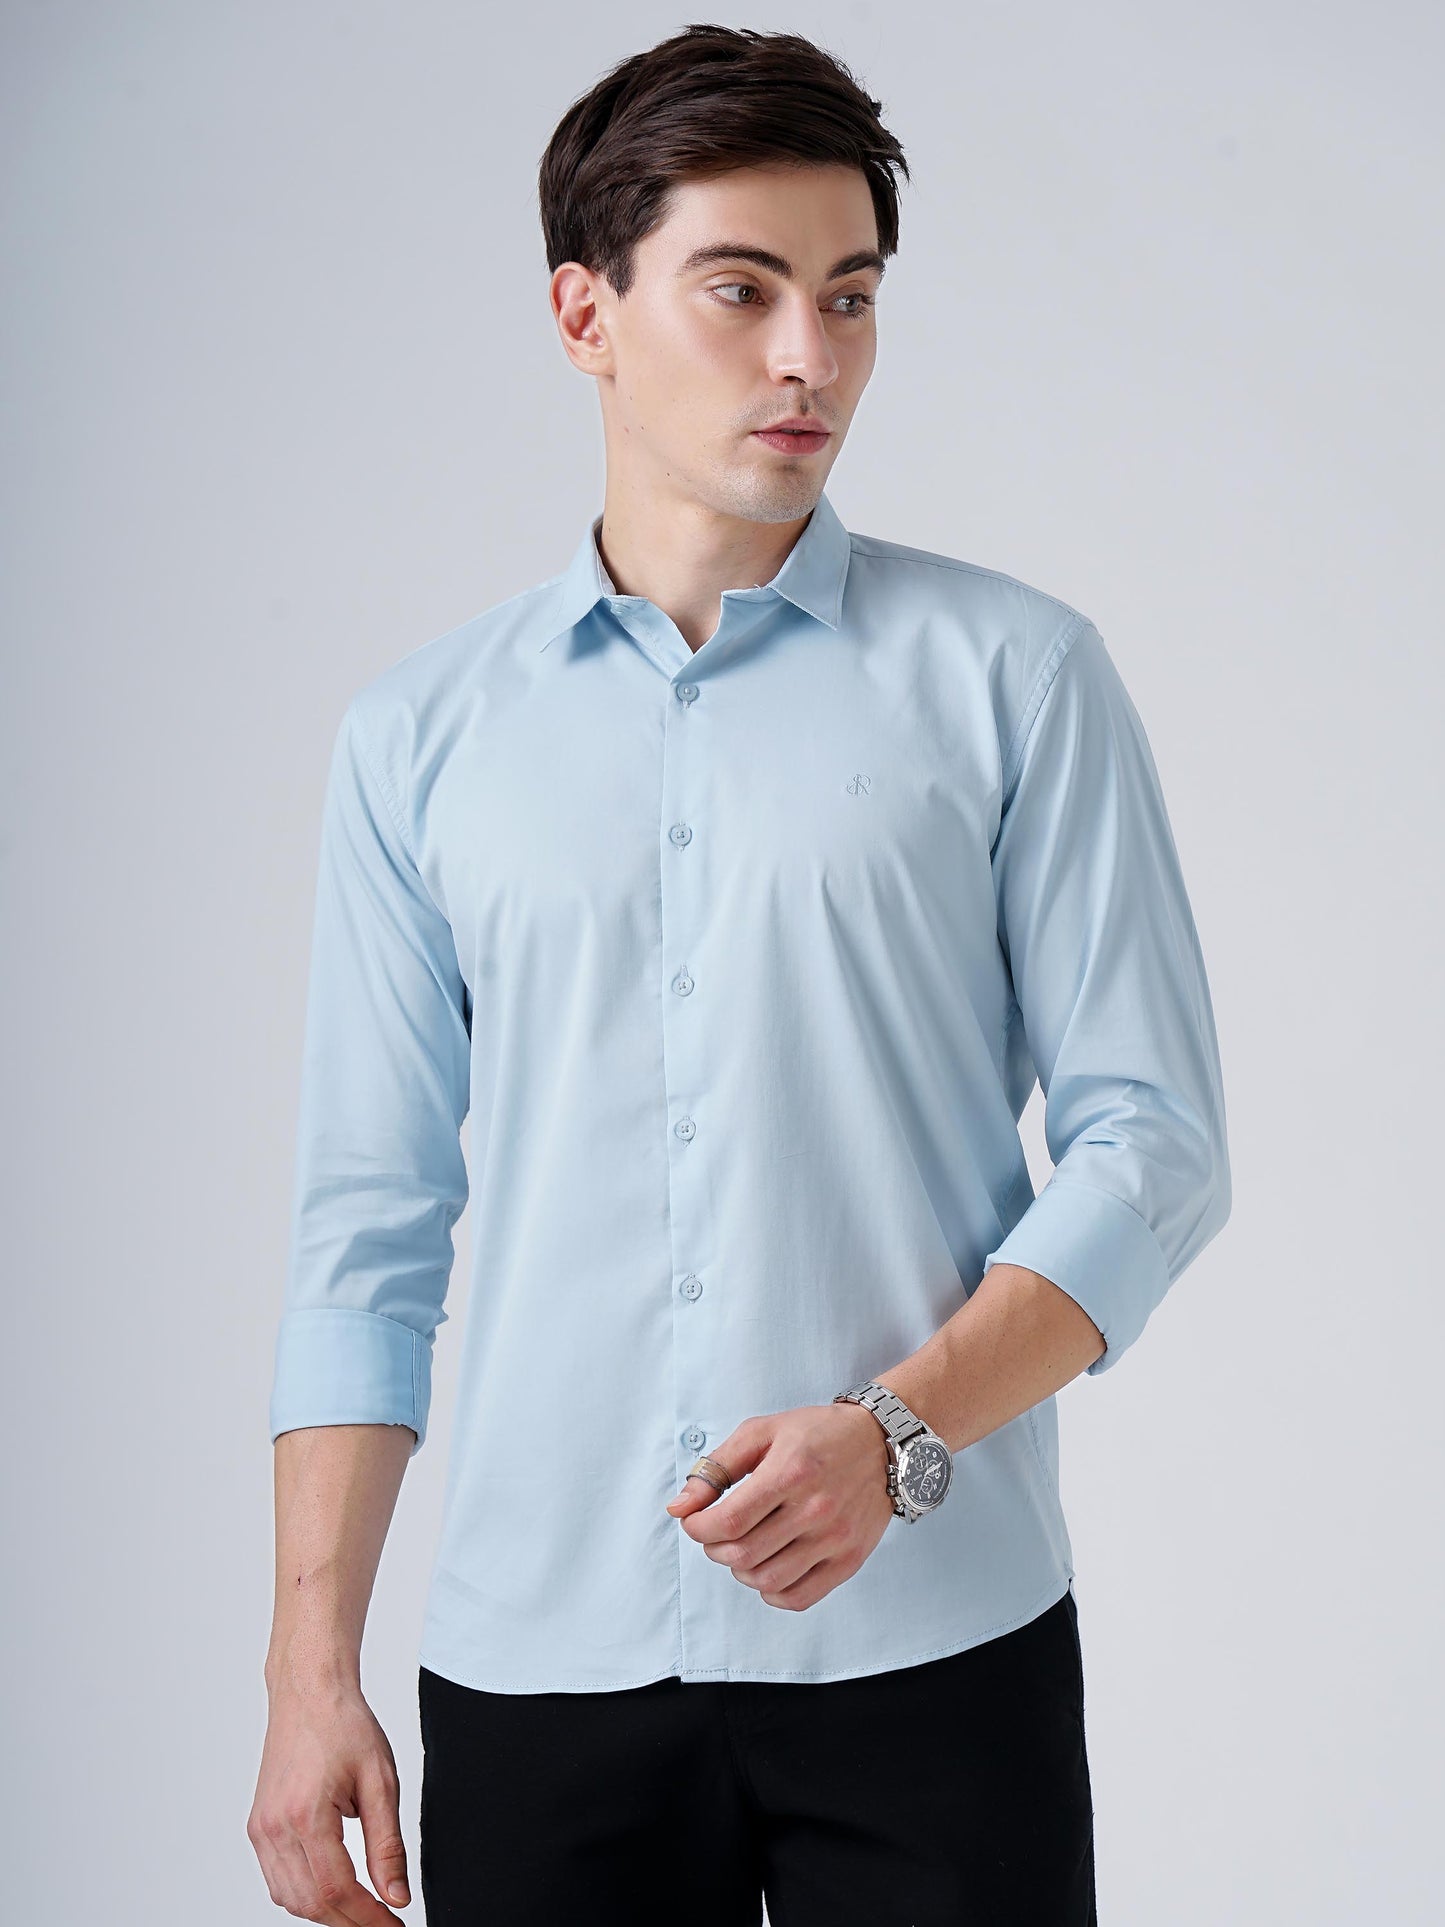 Tropical Blue Solid Shirt